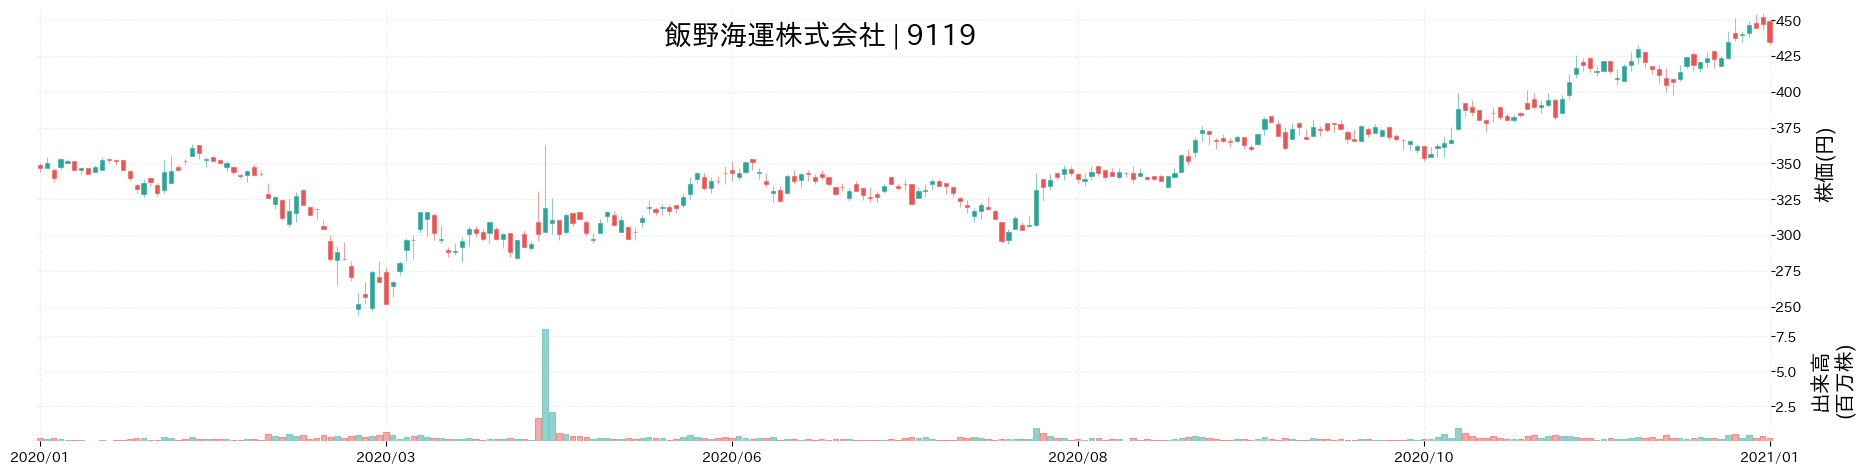 飯野海運の株価推移(2020)